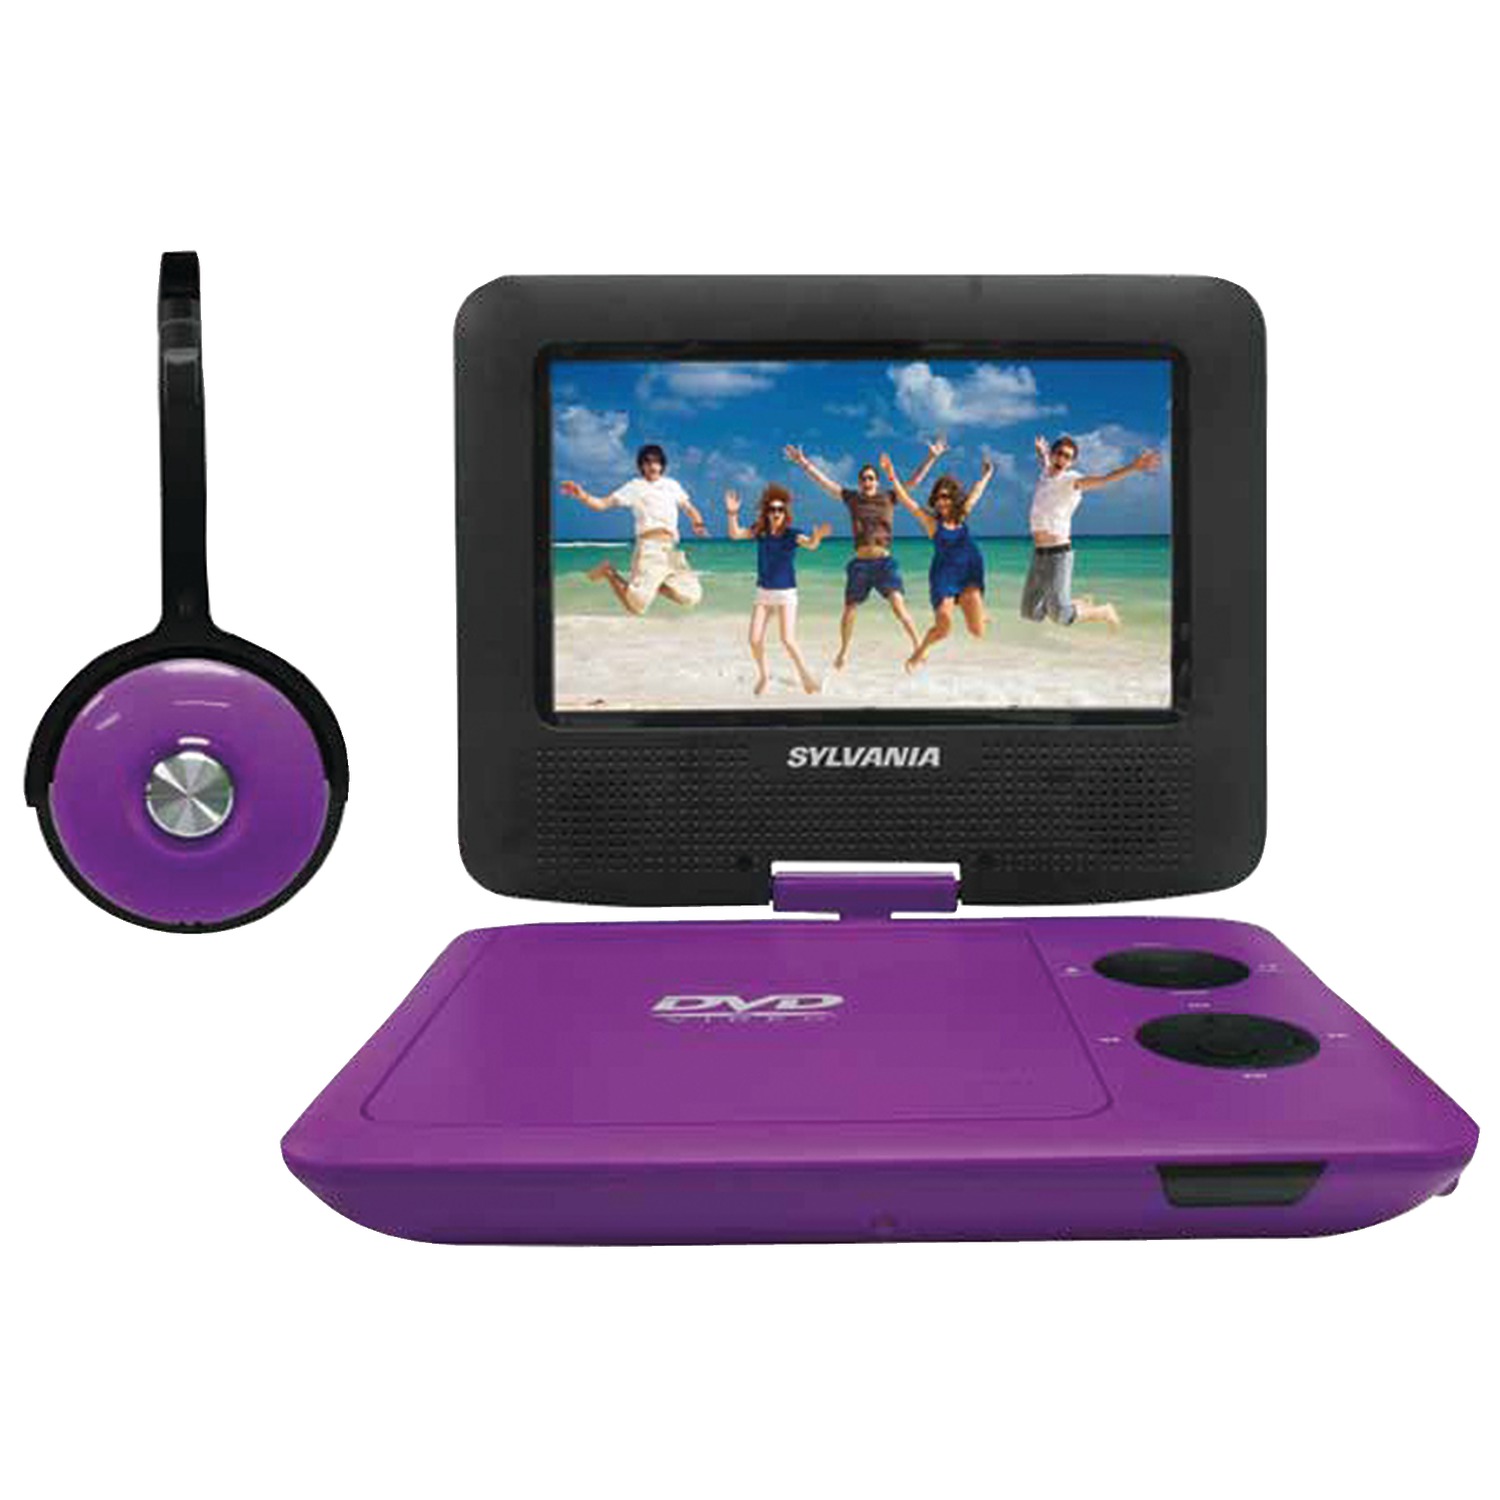 Sylvania 7" Swivel-screen Portable DVD & Media Player With Matching Headphones, SDVD7043-Purpblk - image 1 of 2